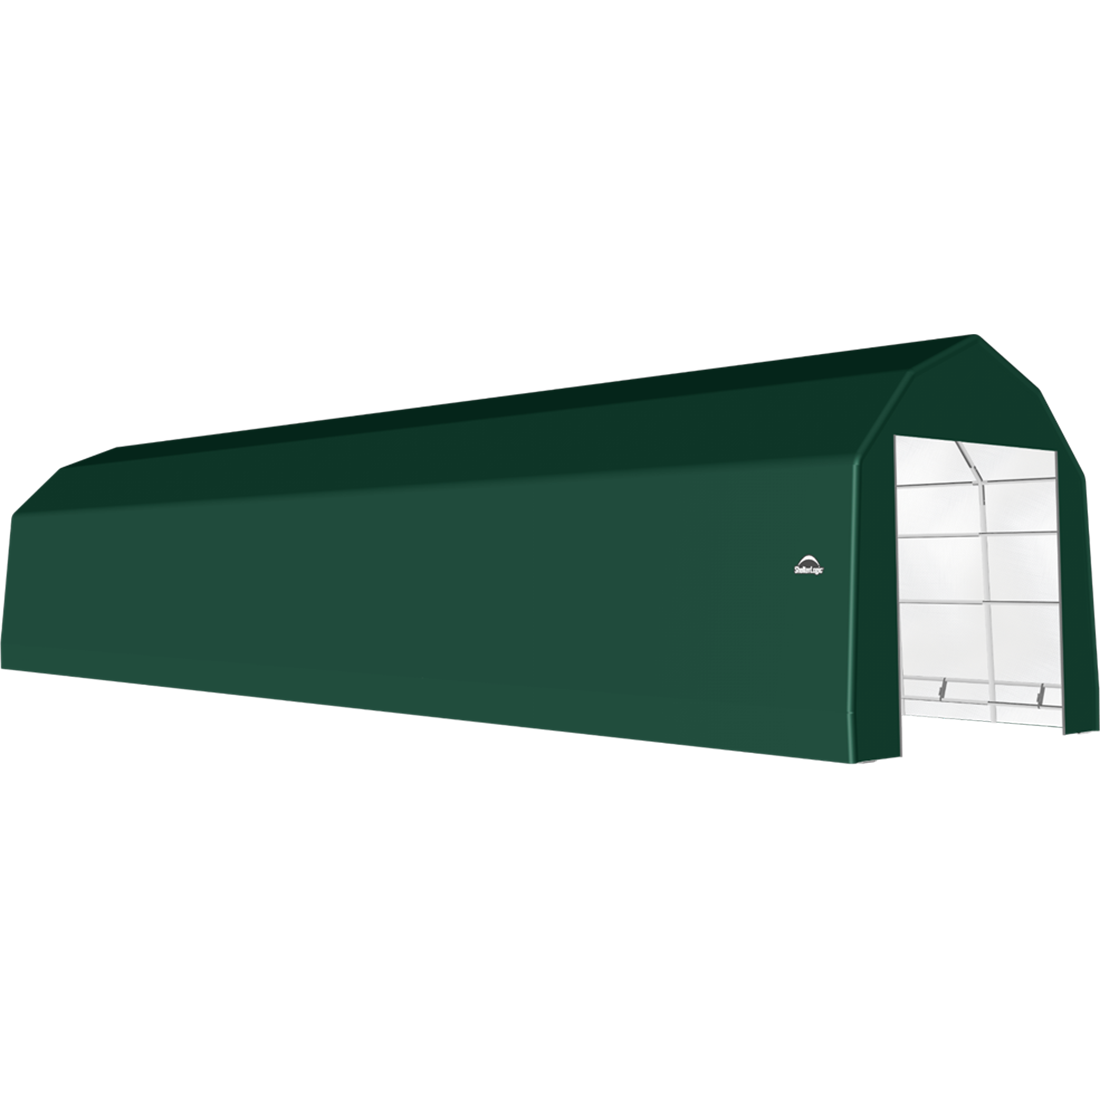 ShelterTech SP Series Barn Shelter, 15 ft. x 52 ft. x 14 ft. Heavy Duty PVC 14.5 oz. Green